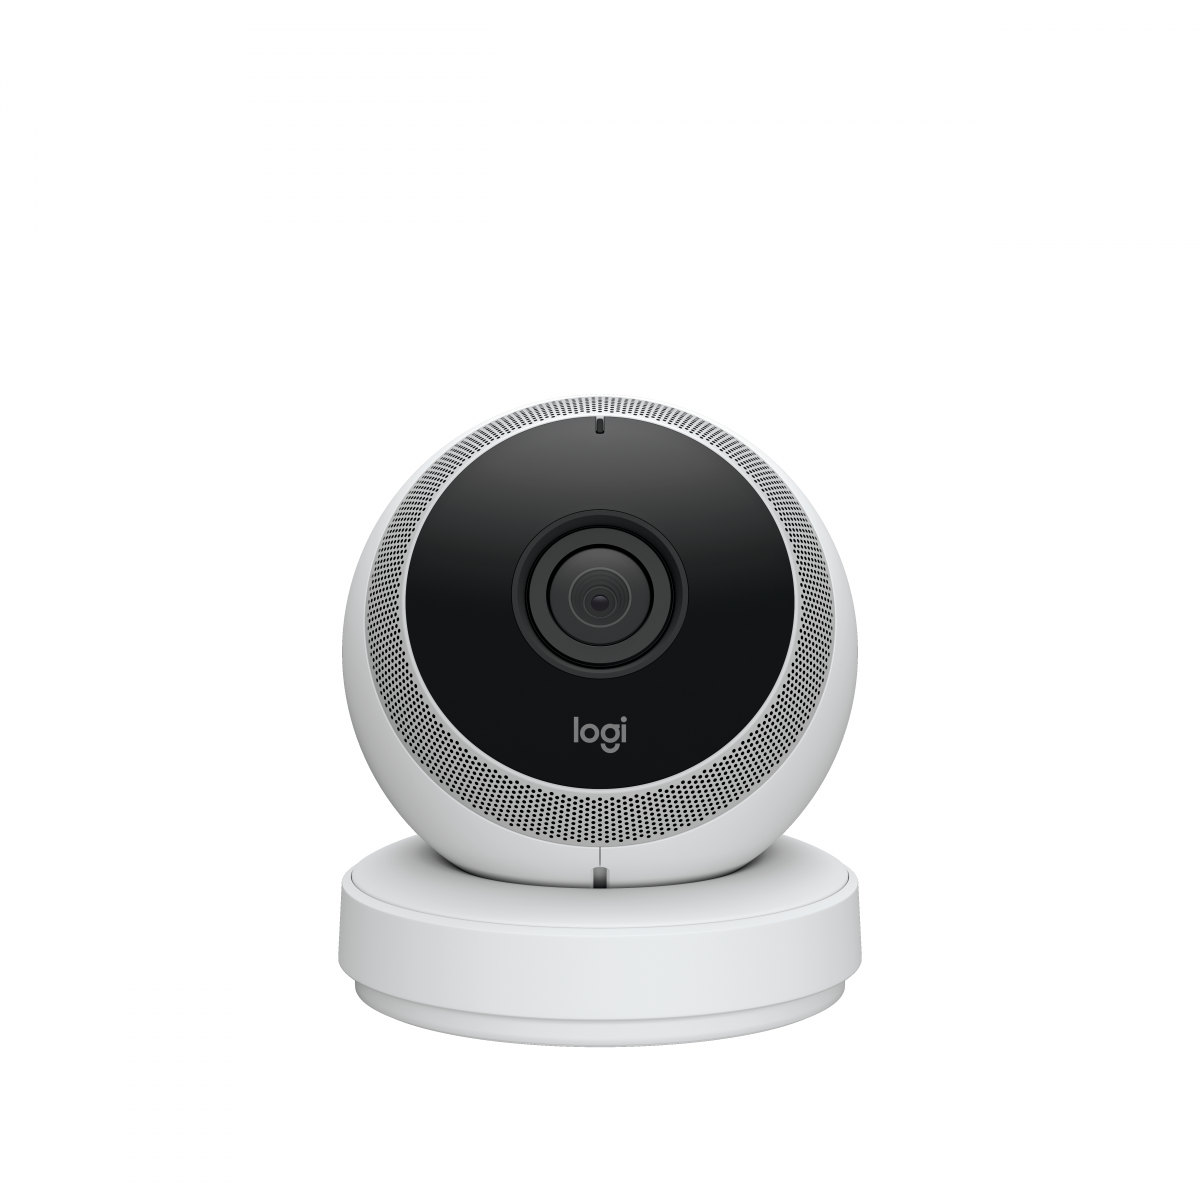 Logitech's New "Logi Circle" Camera Is a Promising Home Monitoring Camera